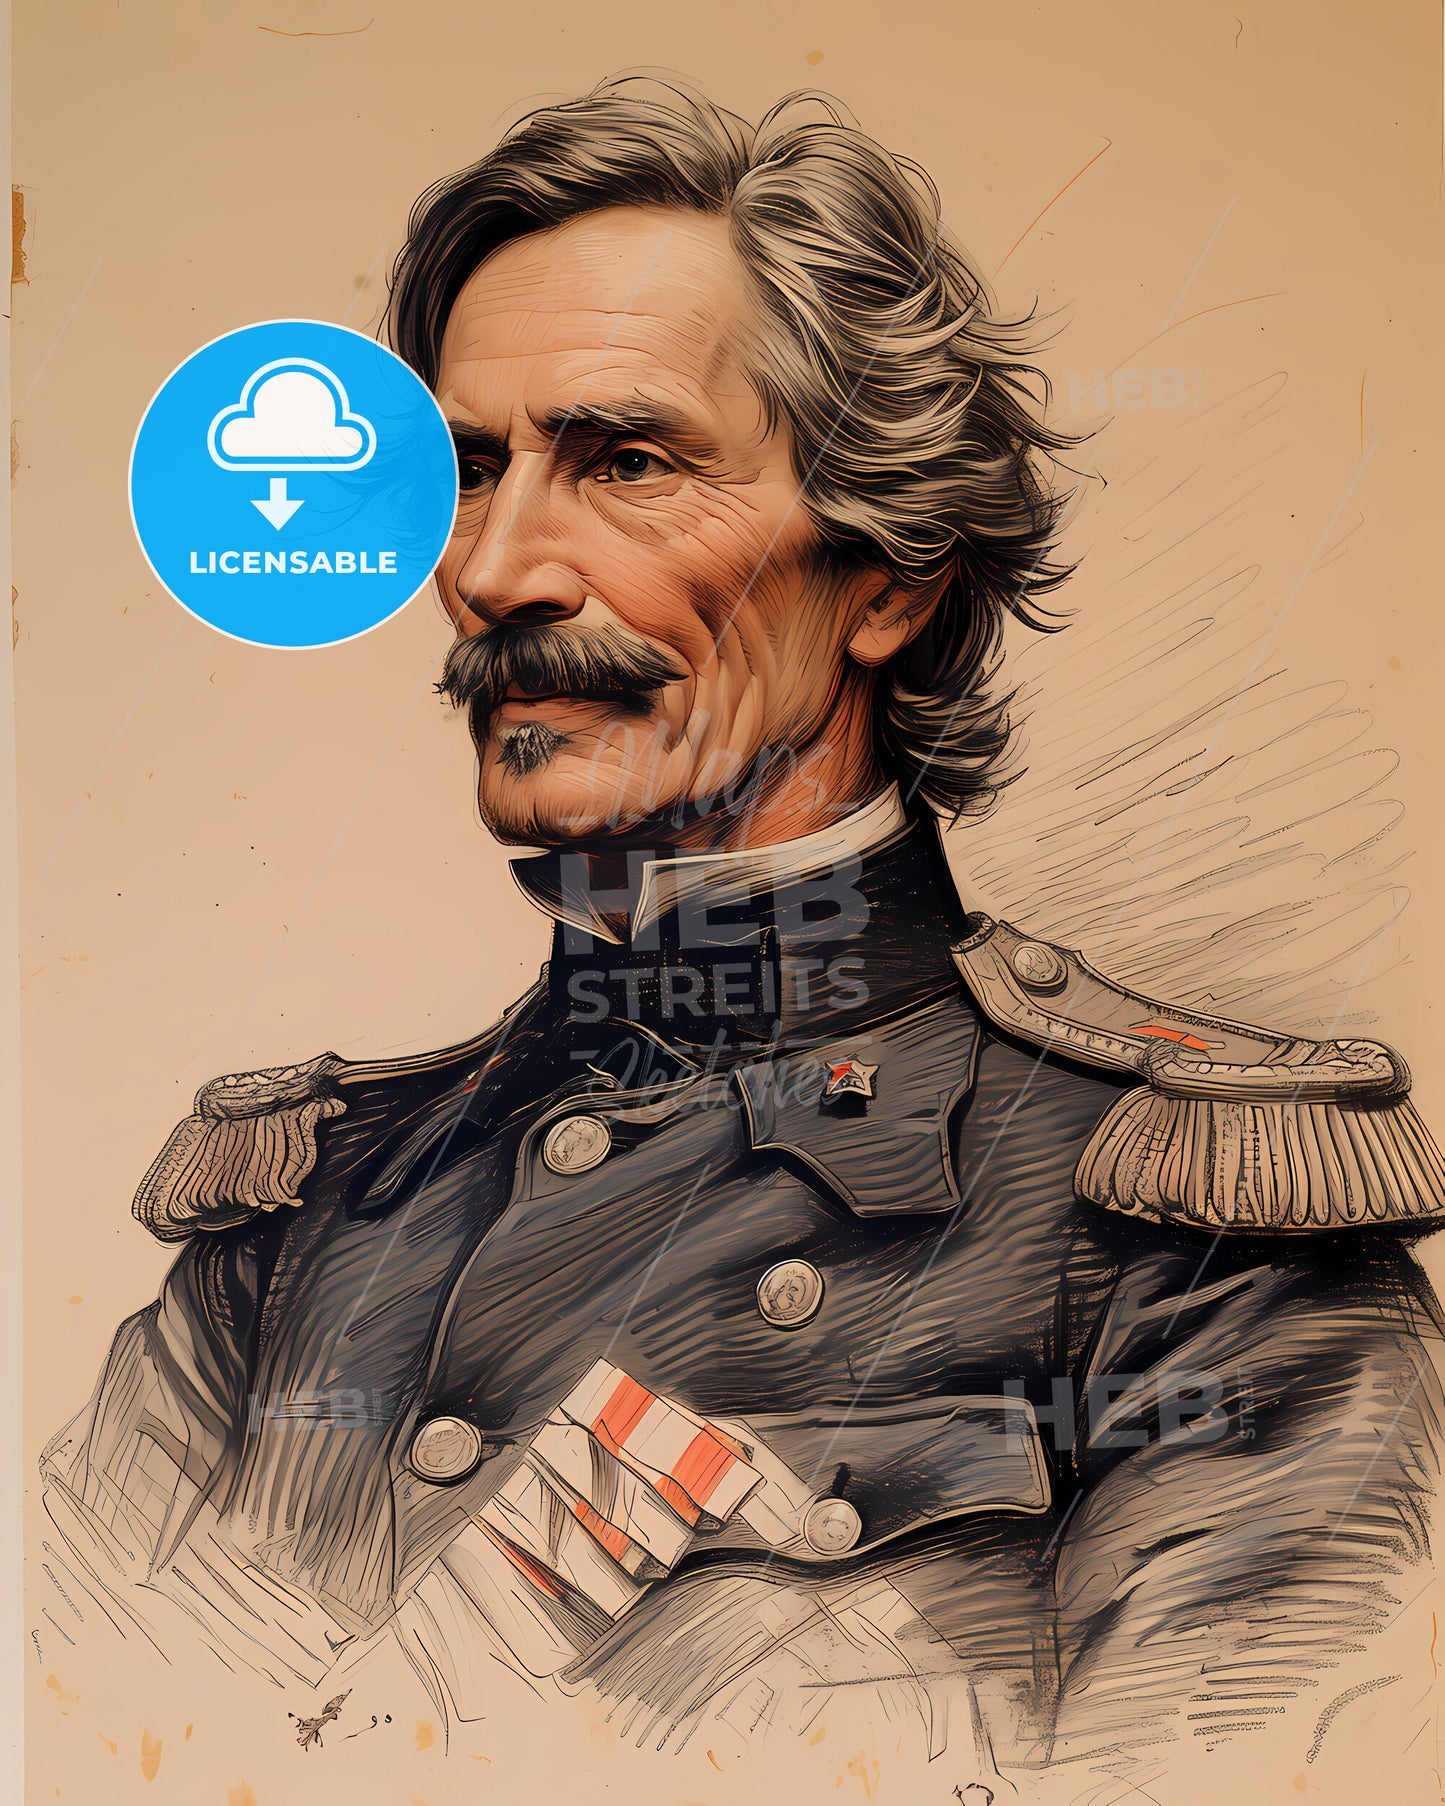 General, George McClellan, 1826 - 1885, a man in a military uniform